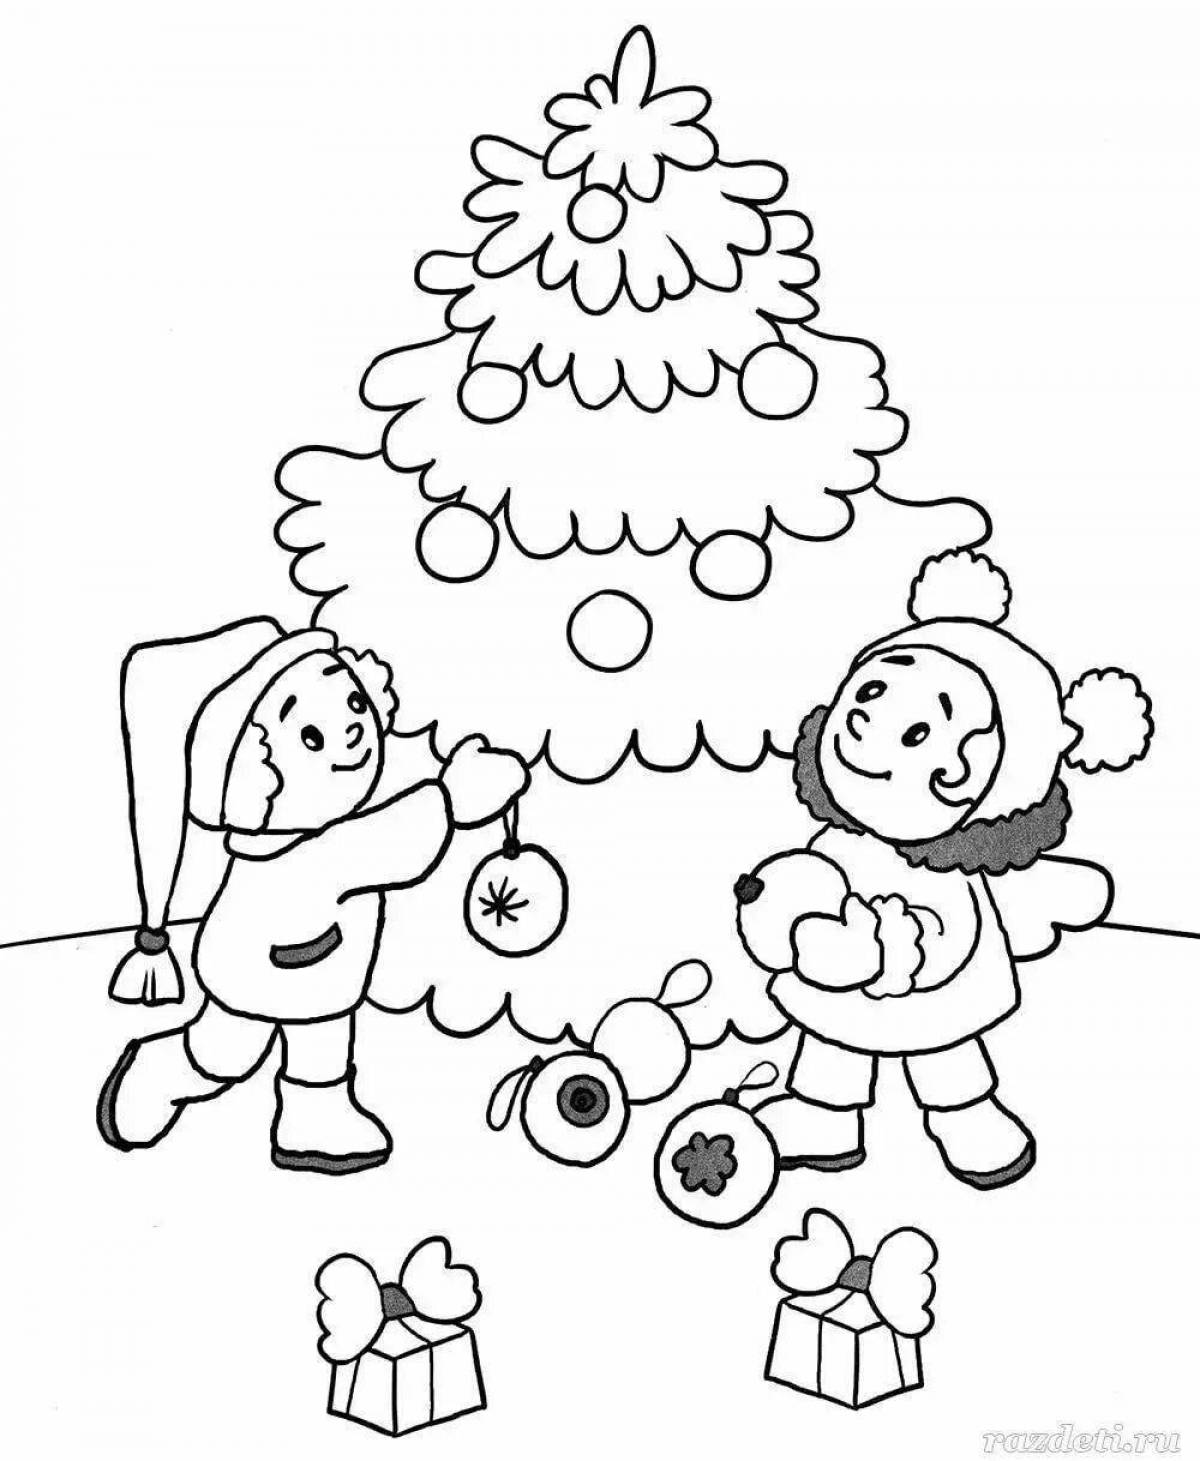 Christmas holiday coloring game